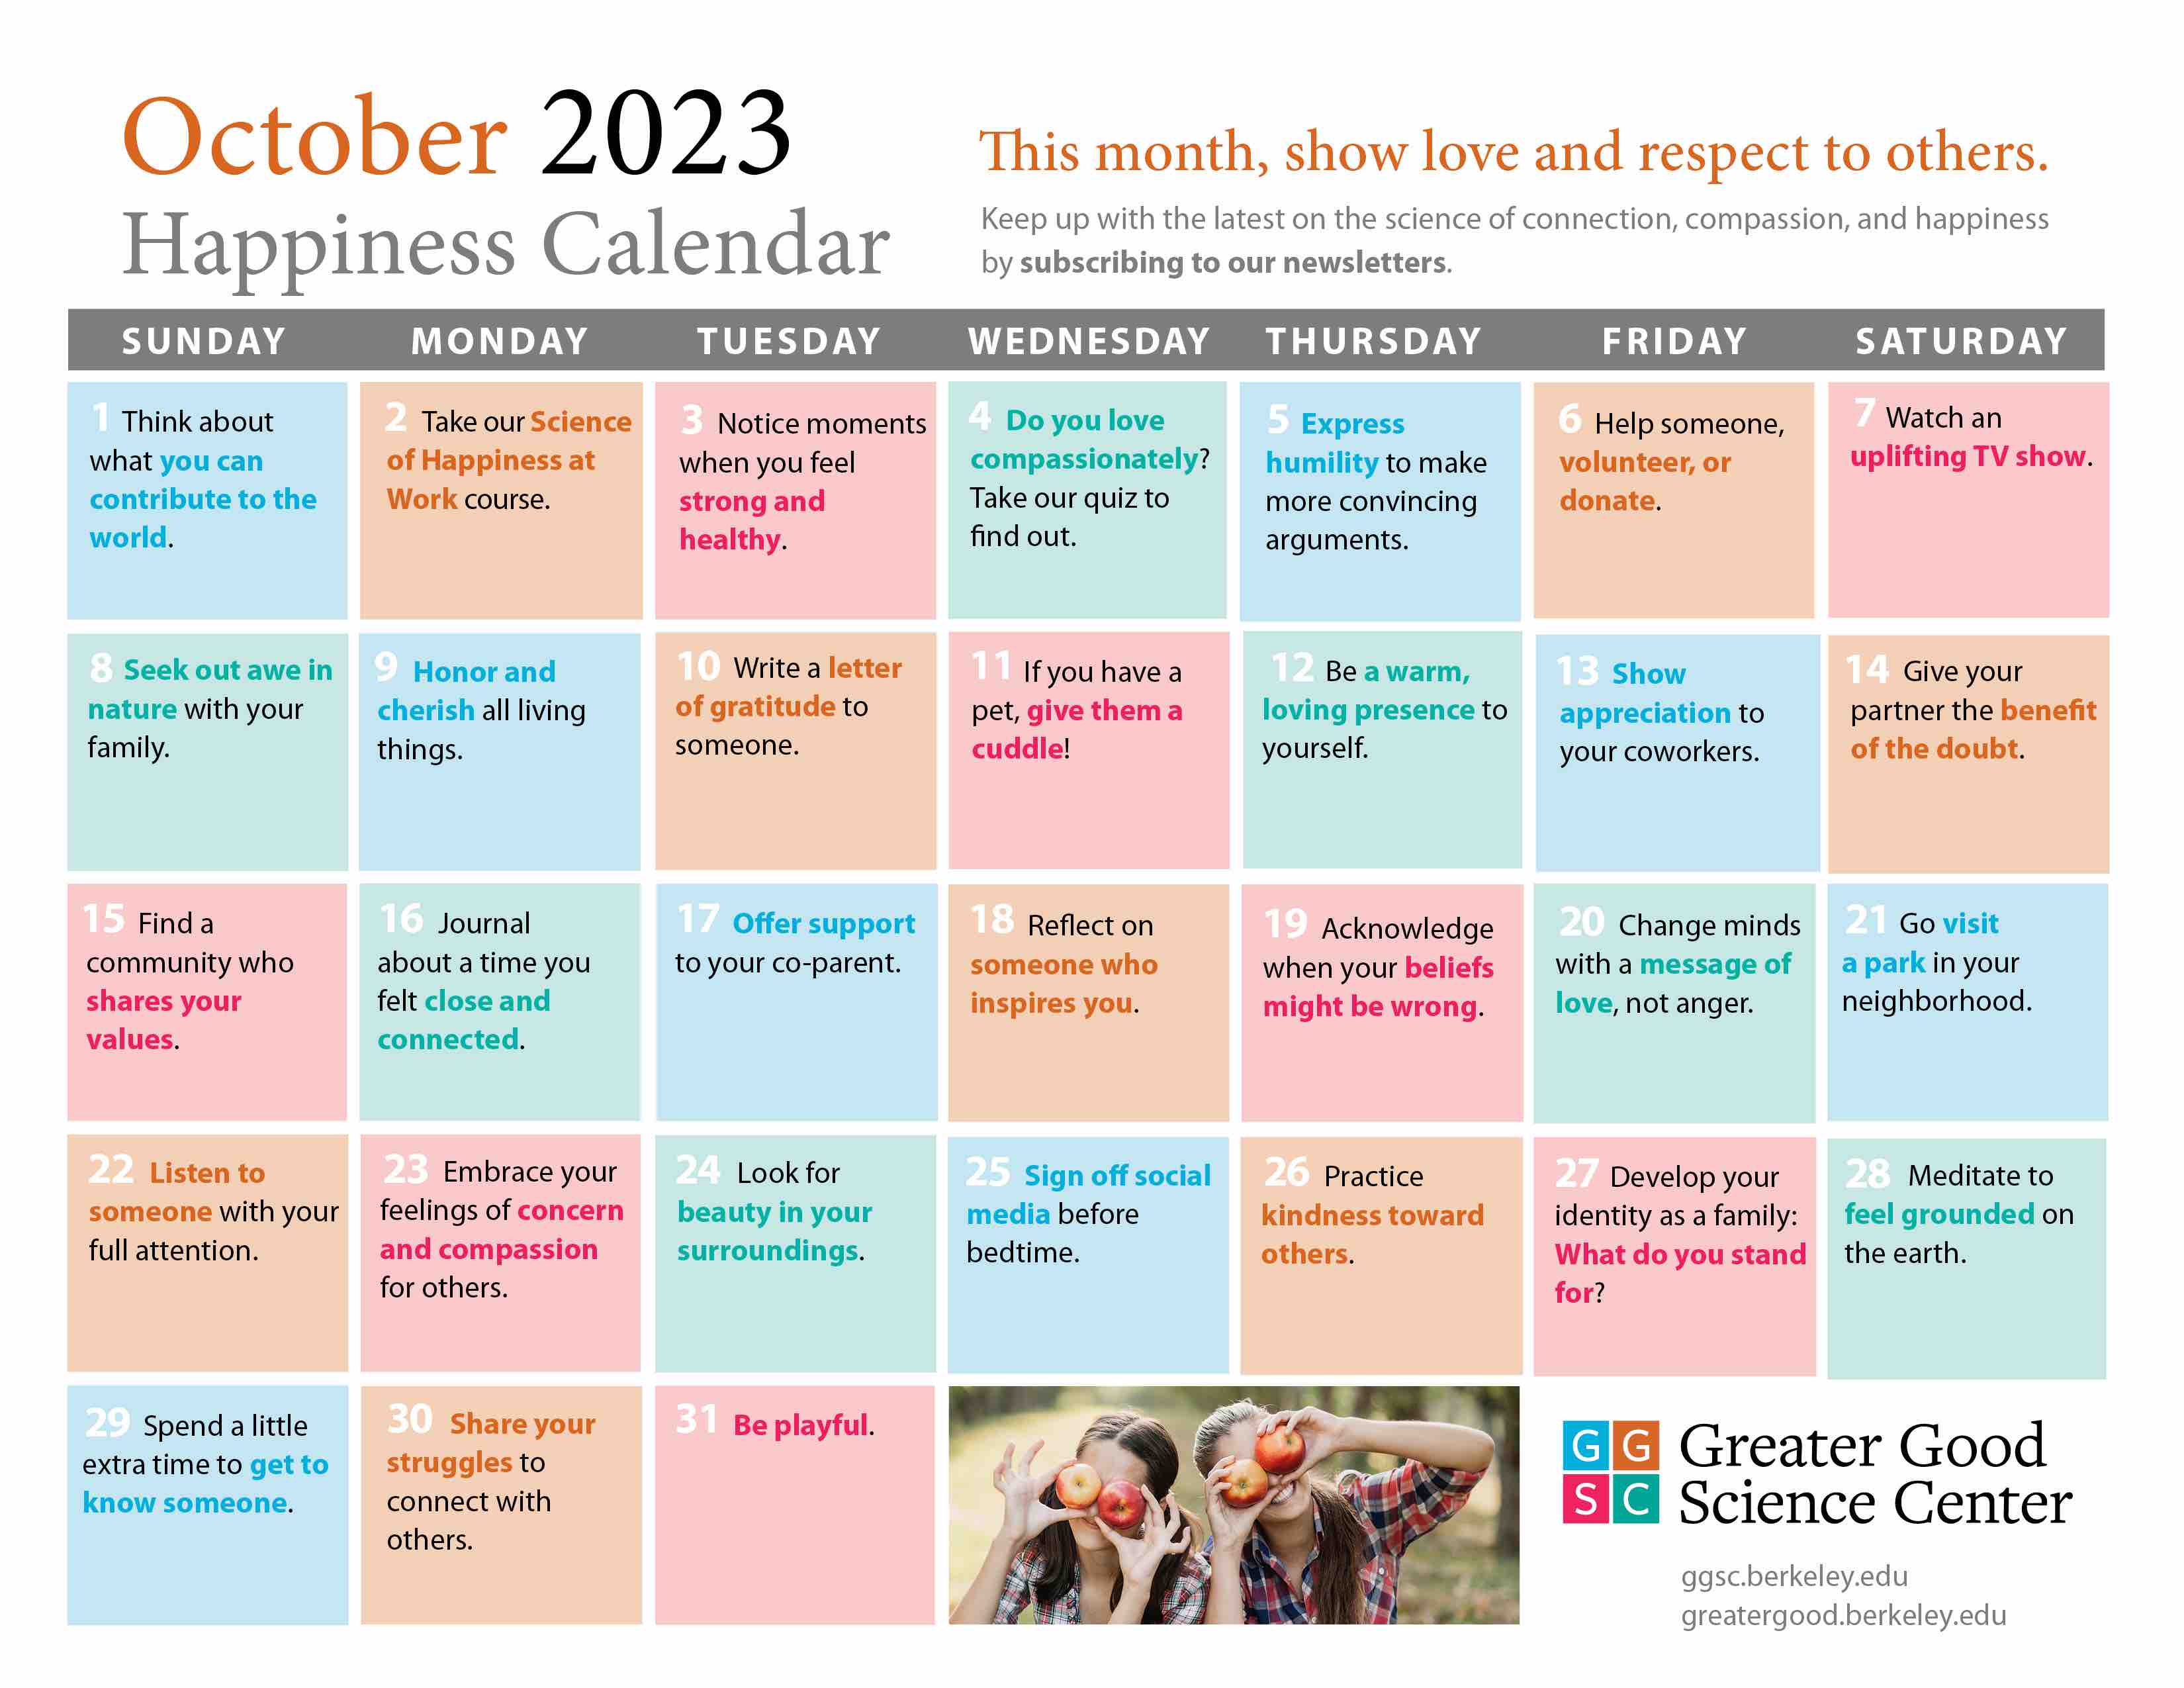 October 2023 happiness calendar